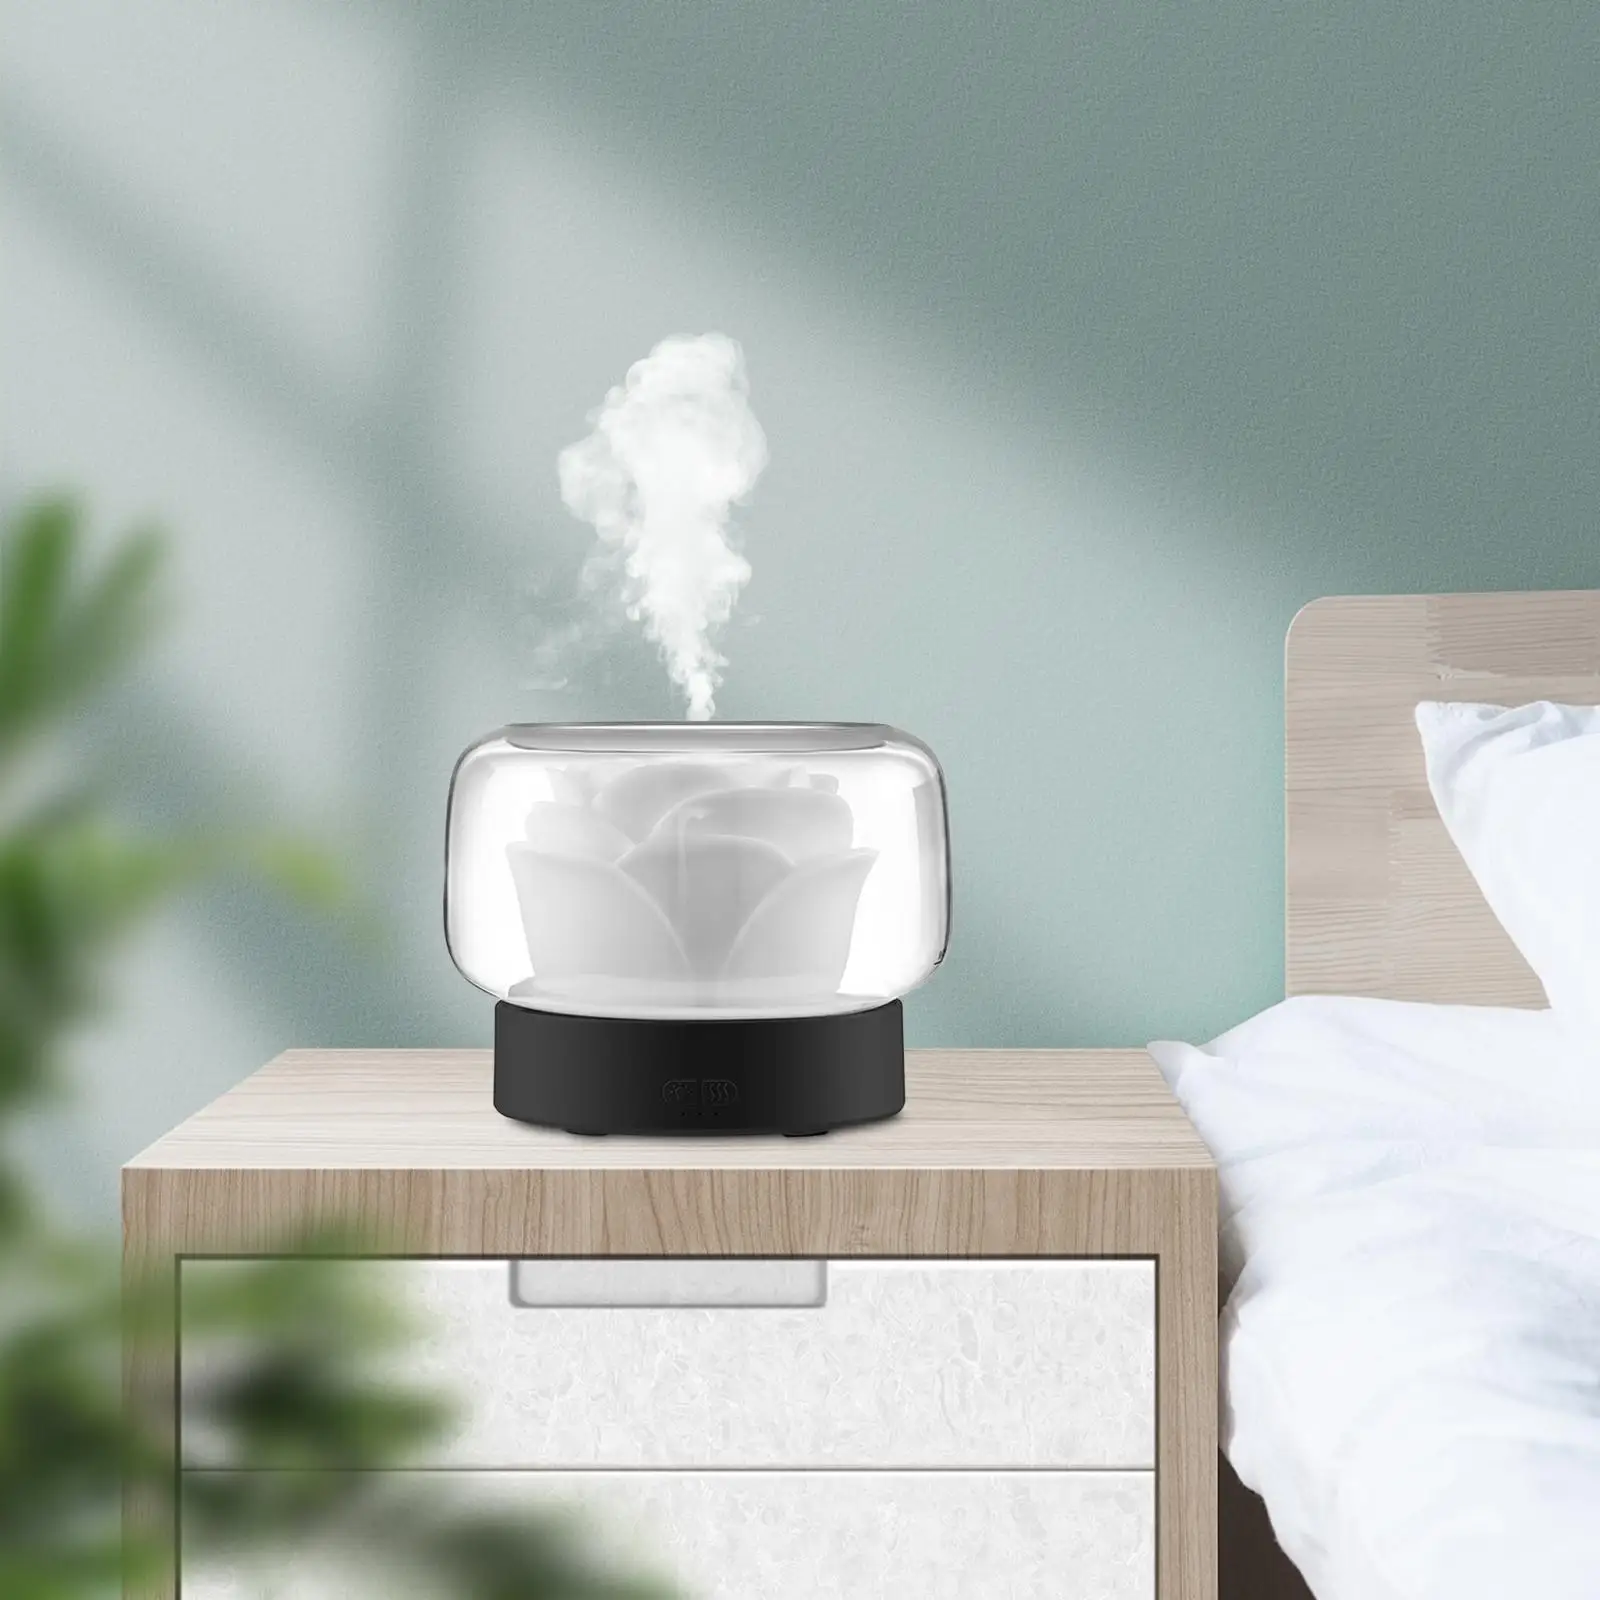 Essential Oil Diffuser Premium Air Humidifier for Yoga Room Home Decor Study